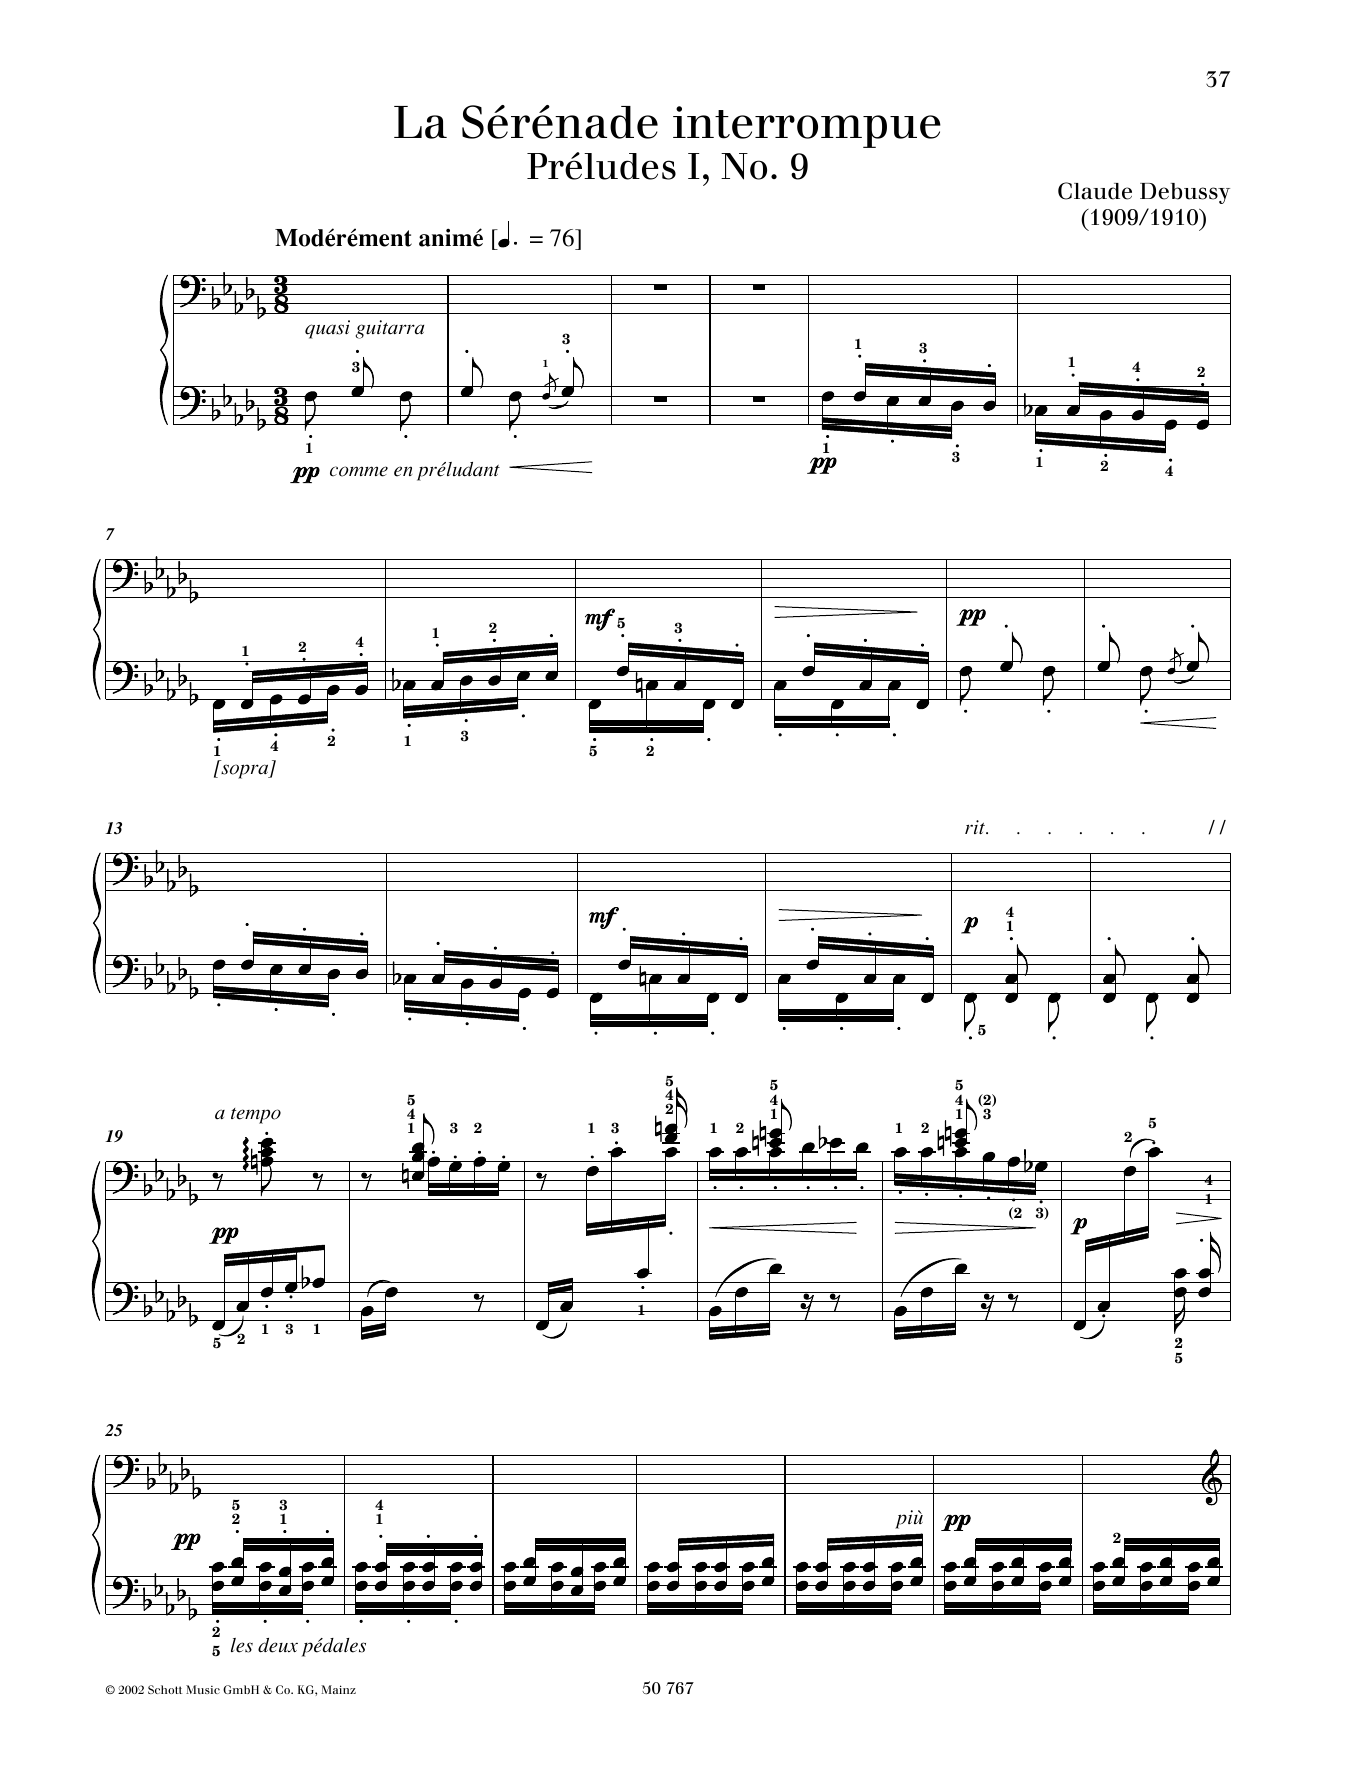 Claude Debussy La Serenade Interrompue Sheet Music Notes & Chords for Piano Solo - Download or Print PDF